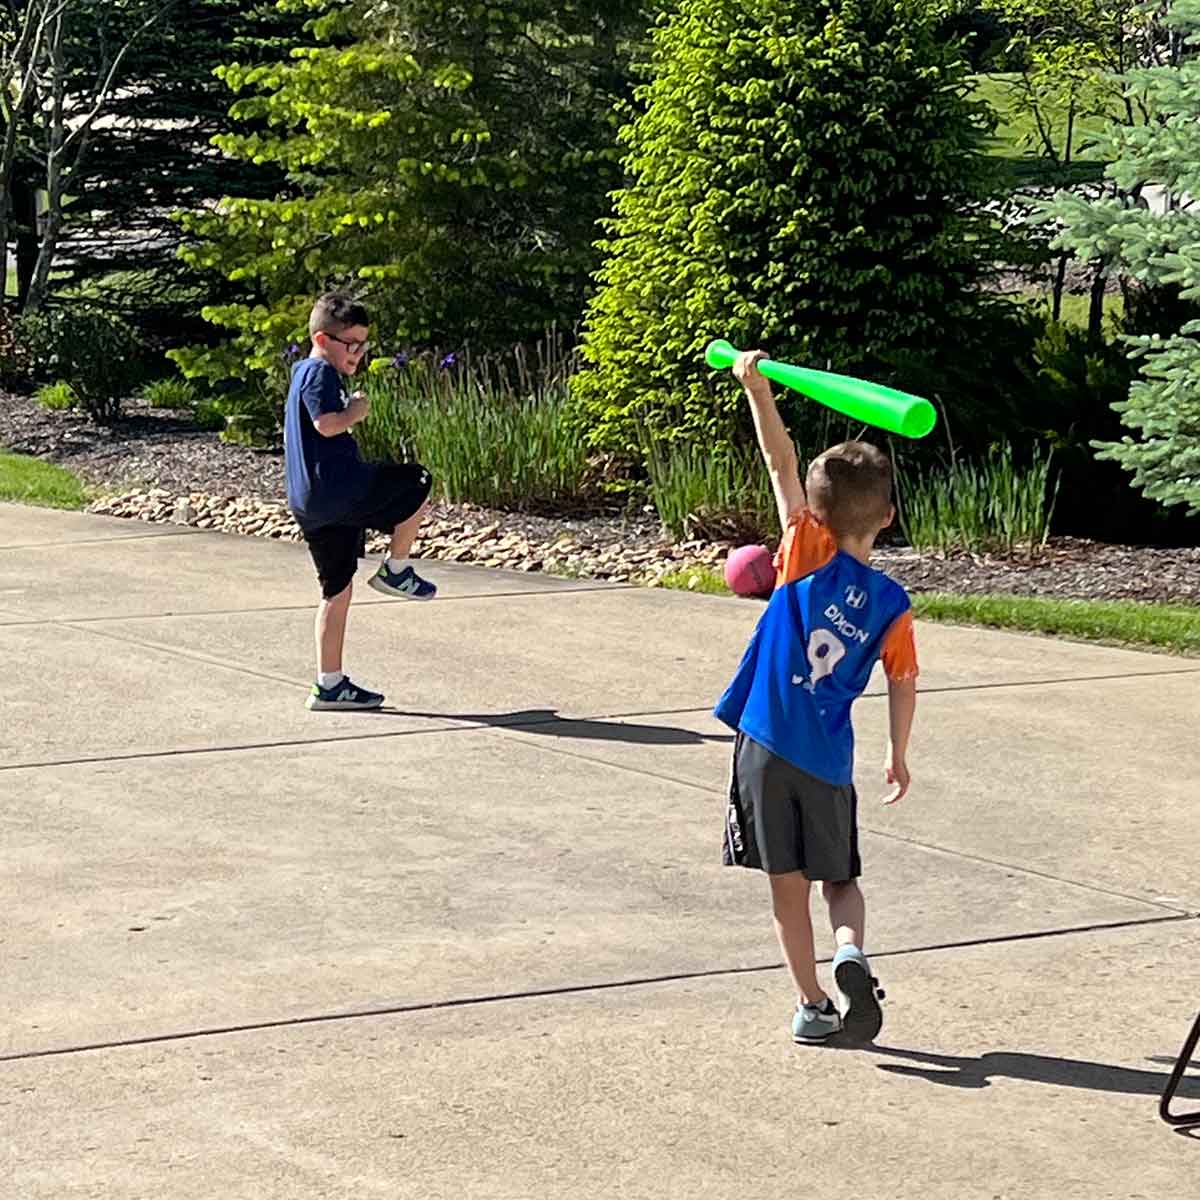 Boys playing baseball in a driveway.